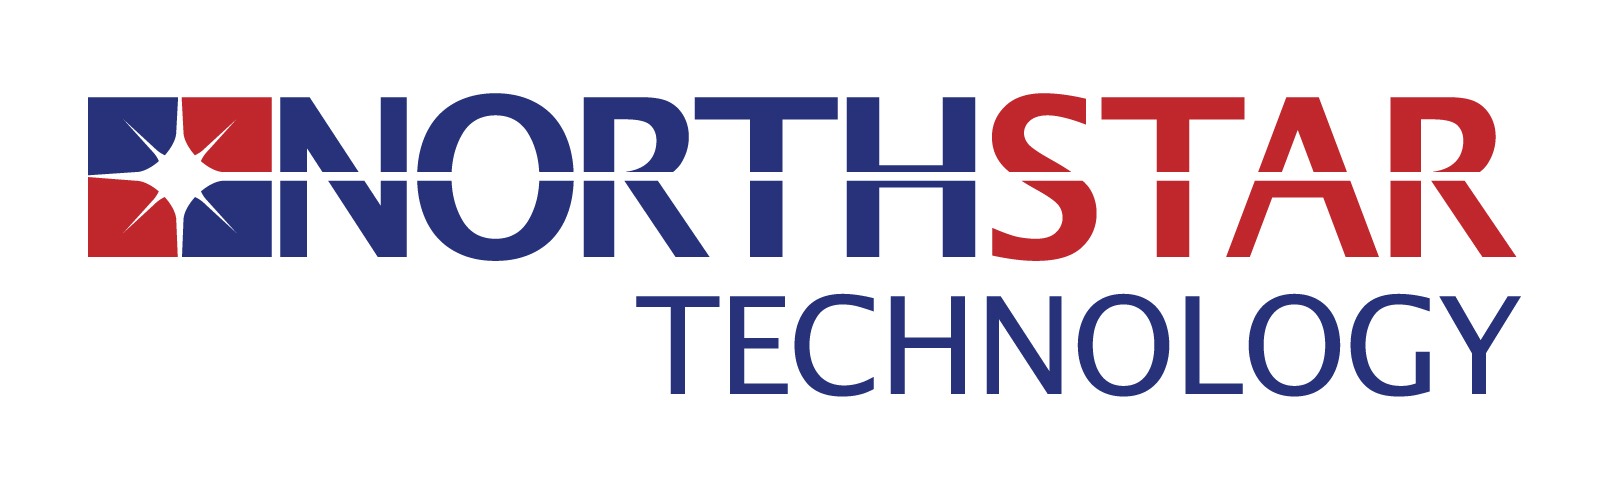 Northstar Technology Logo